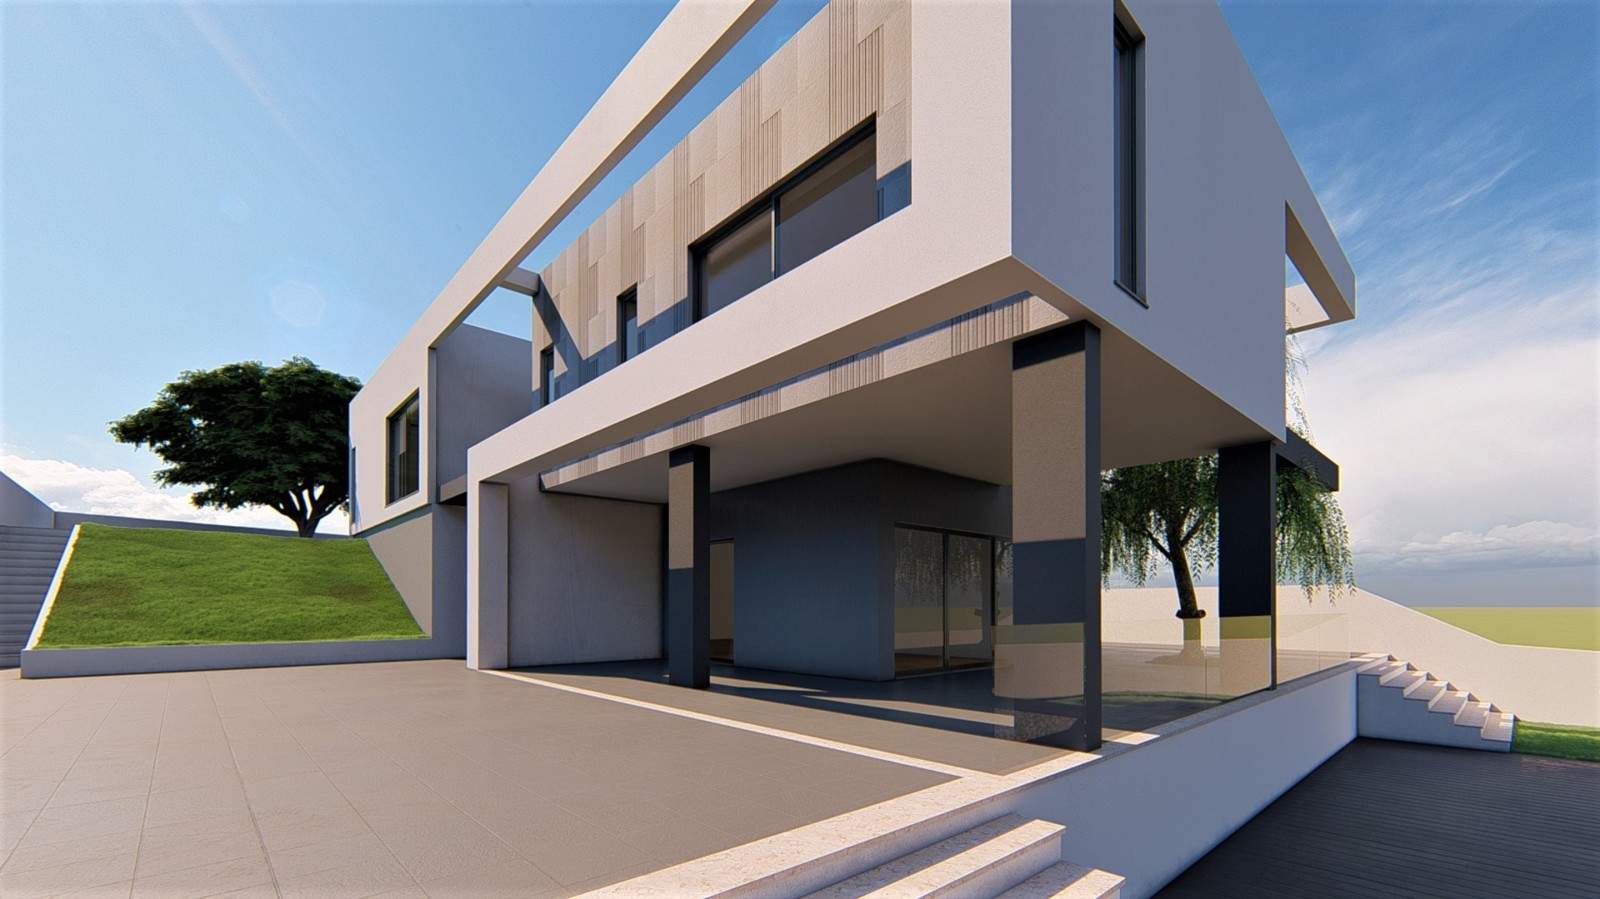 3 bedroom villa under construction for sale, in Vilamoura, Algarve_213453